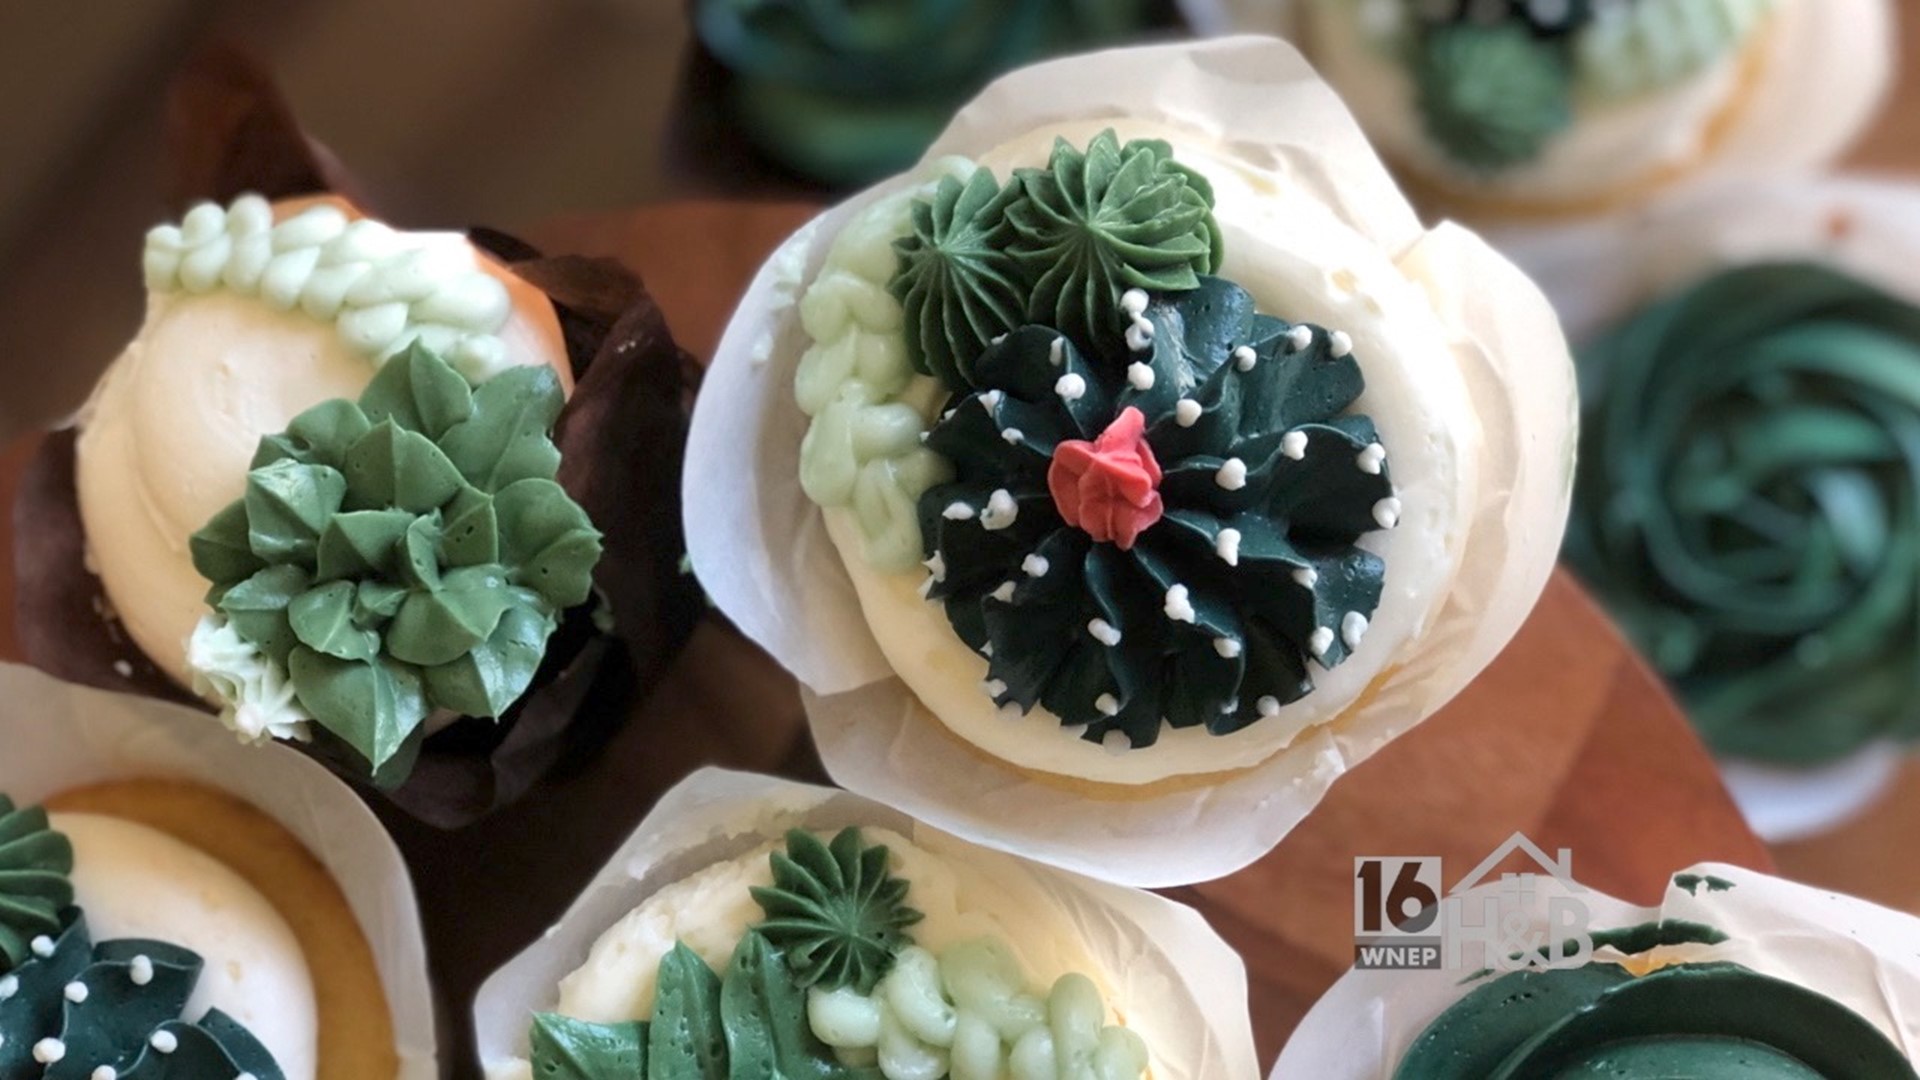 Gable House Bakery: Succulent Cupcakes